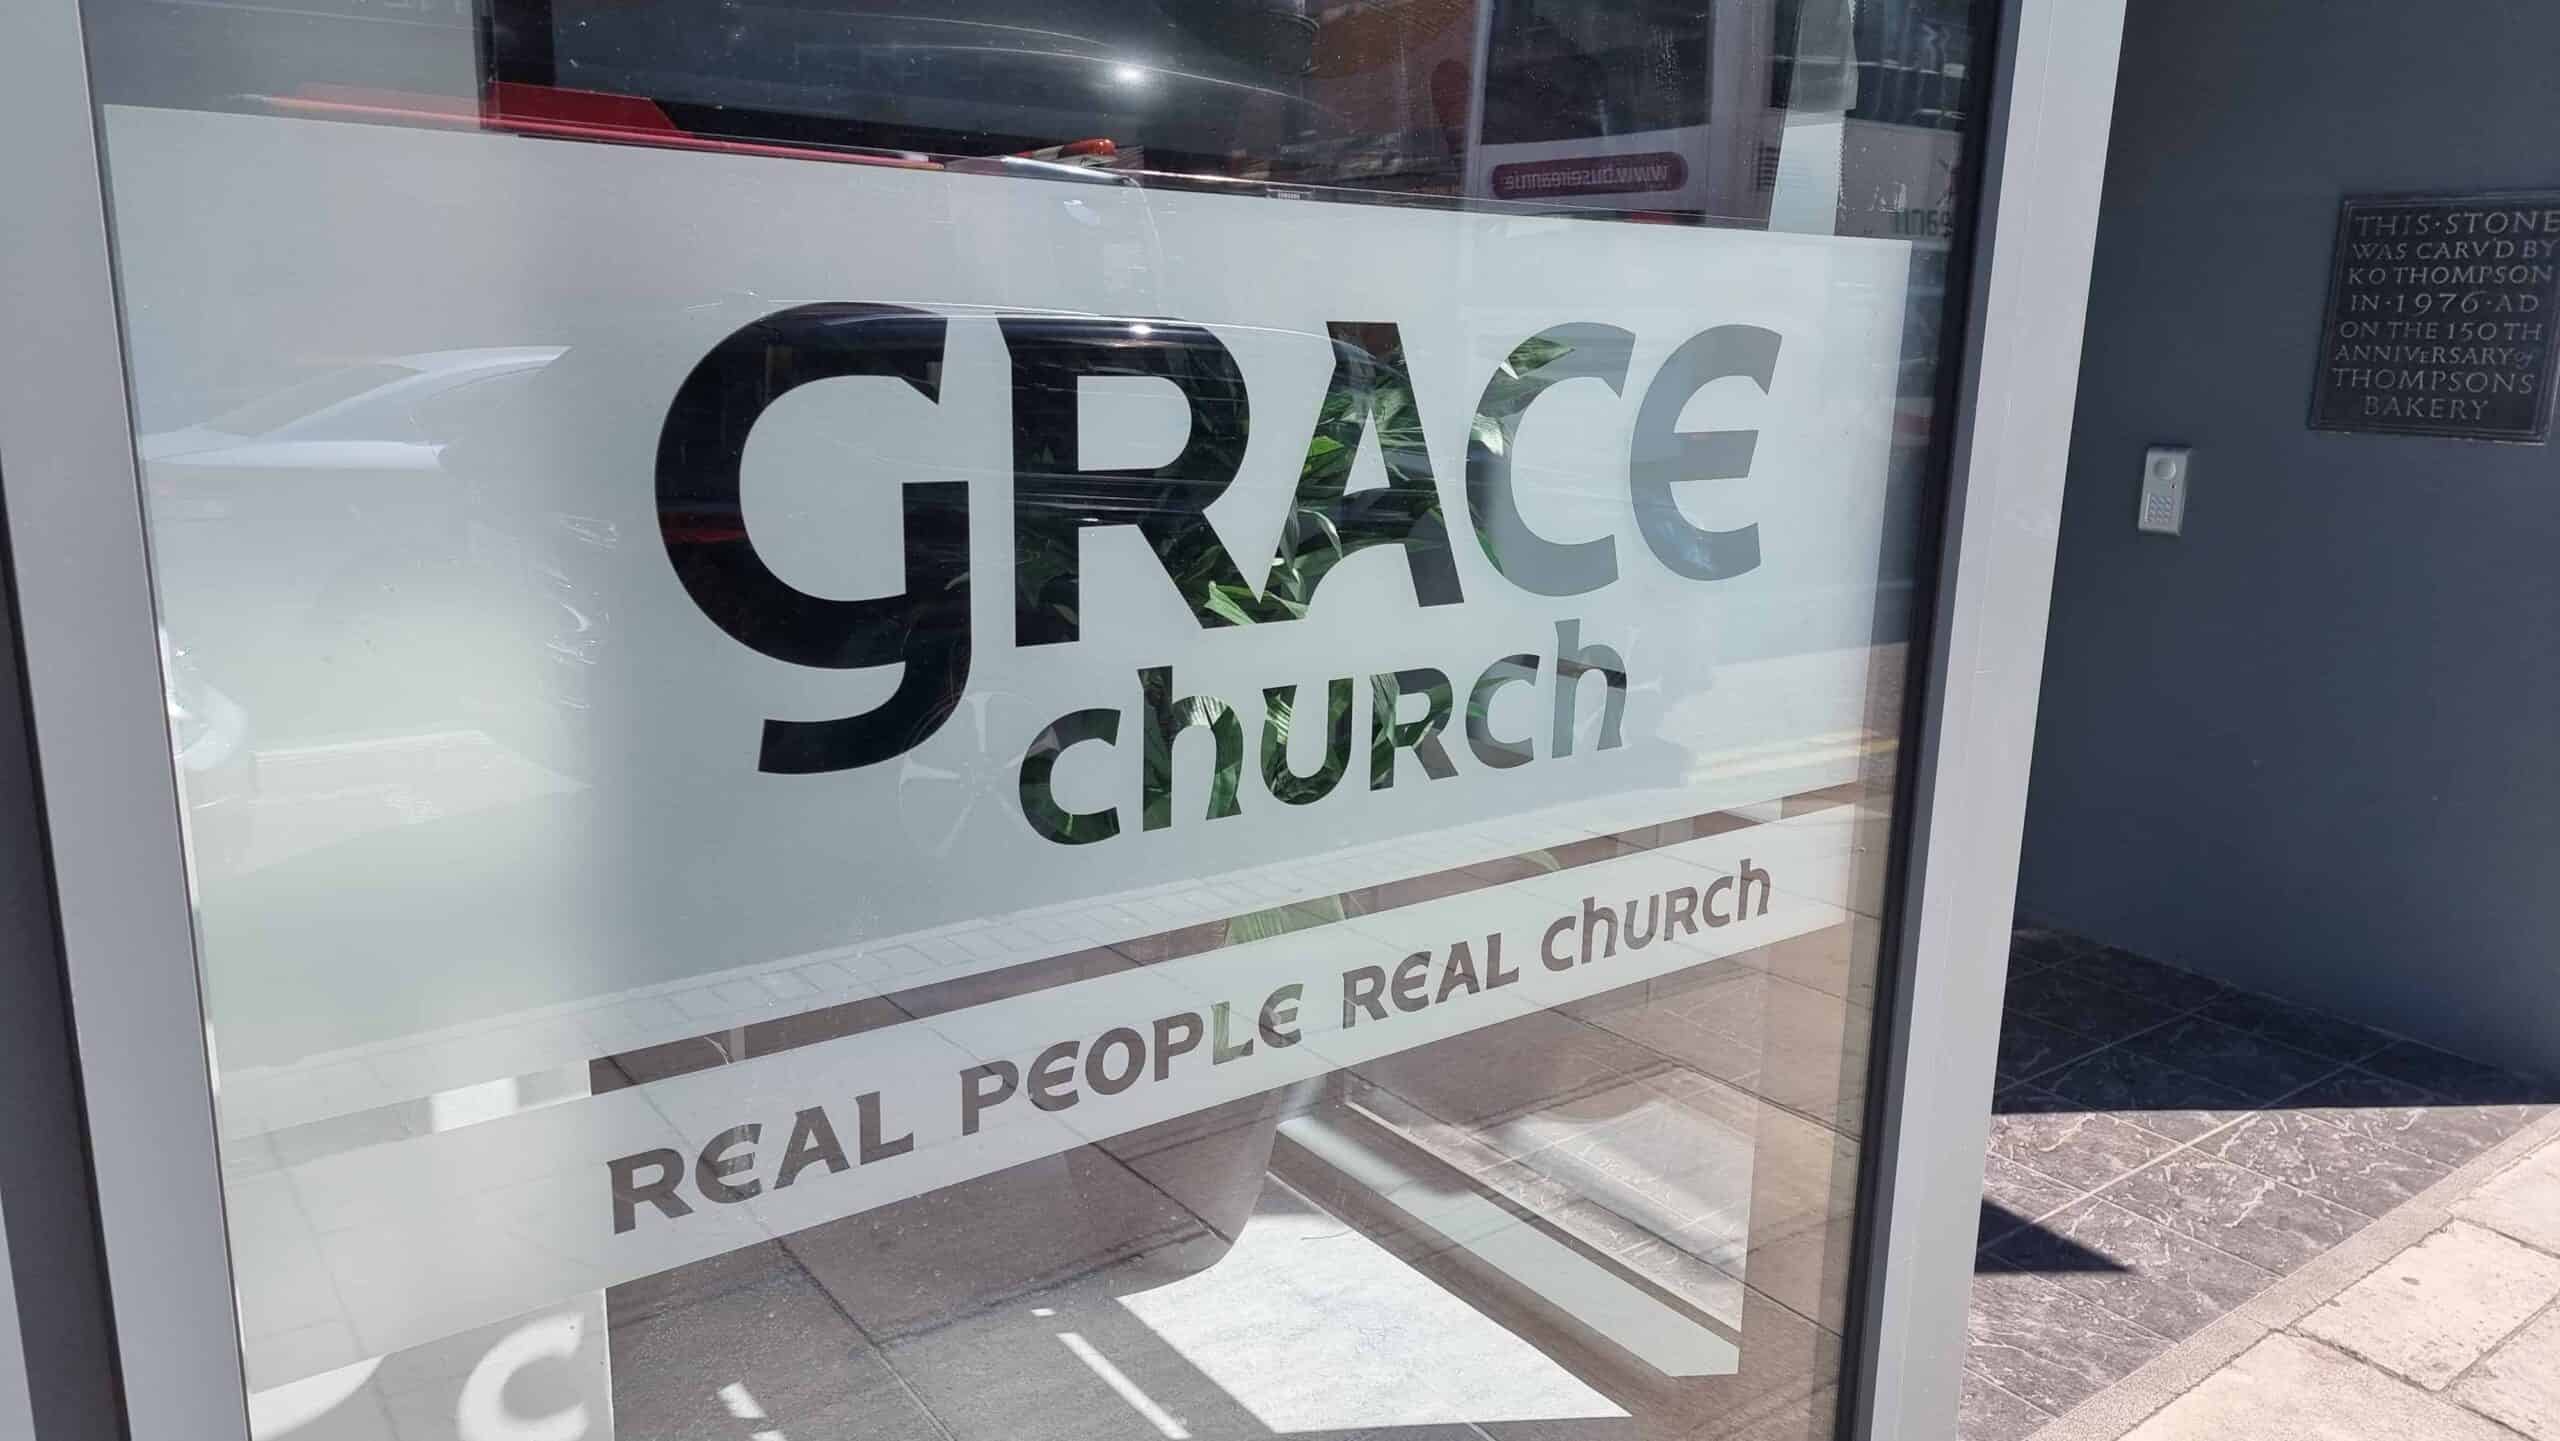 Grace church Cork City